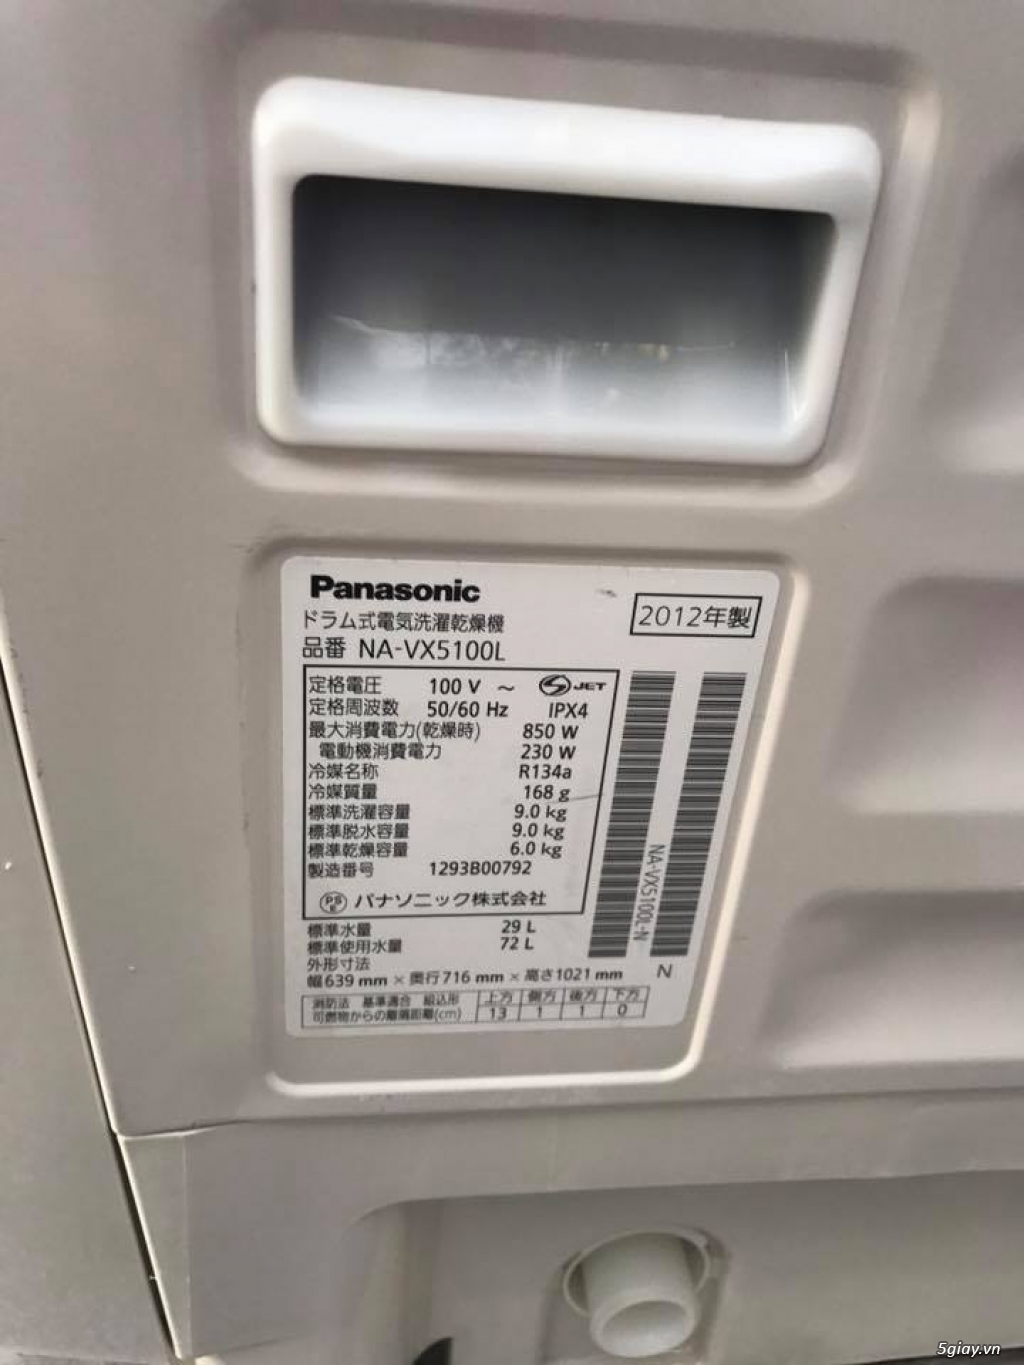 Máy giặt Panasonic, National, Toshiba kết hợp máy sấy - 3